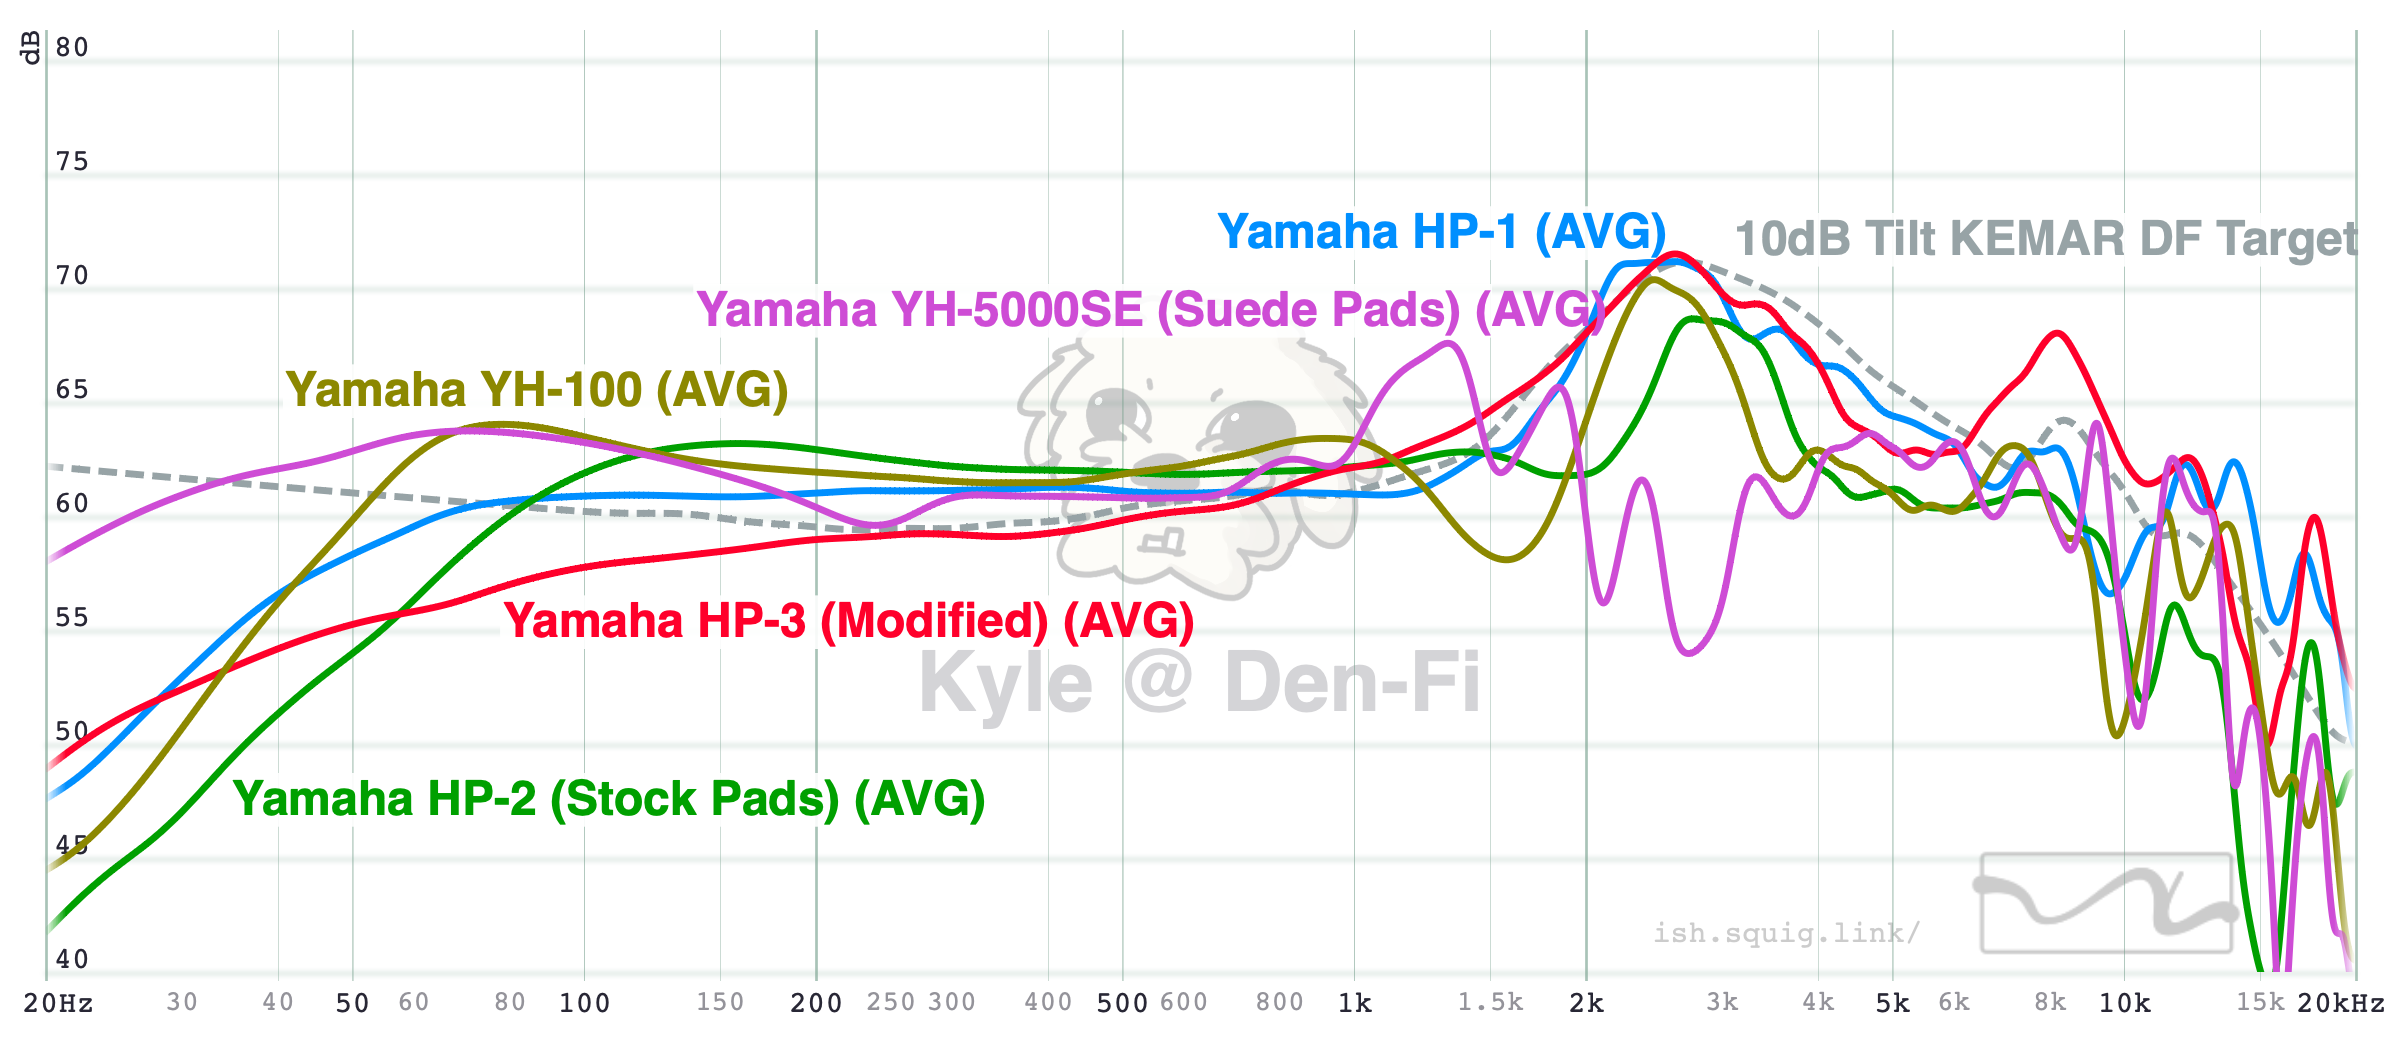 Yamaha YH-5000SE - A Half-Century In The Making